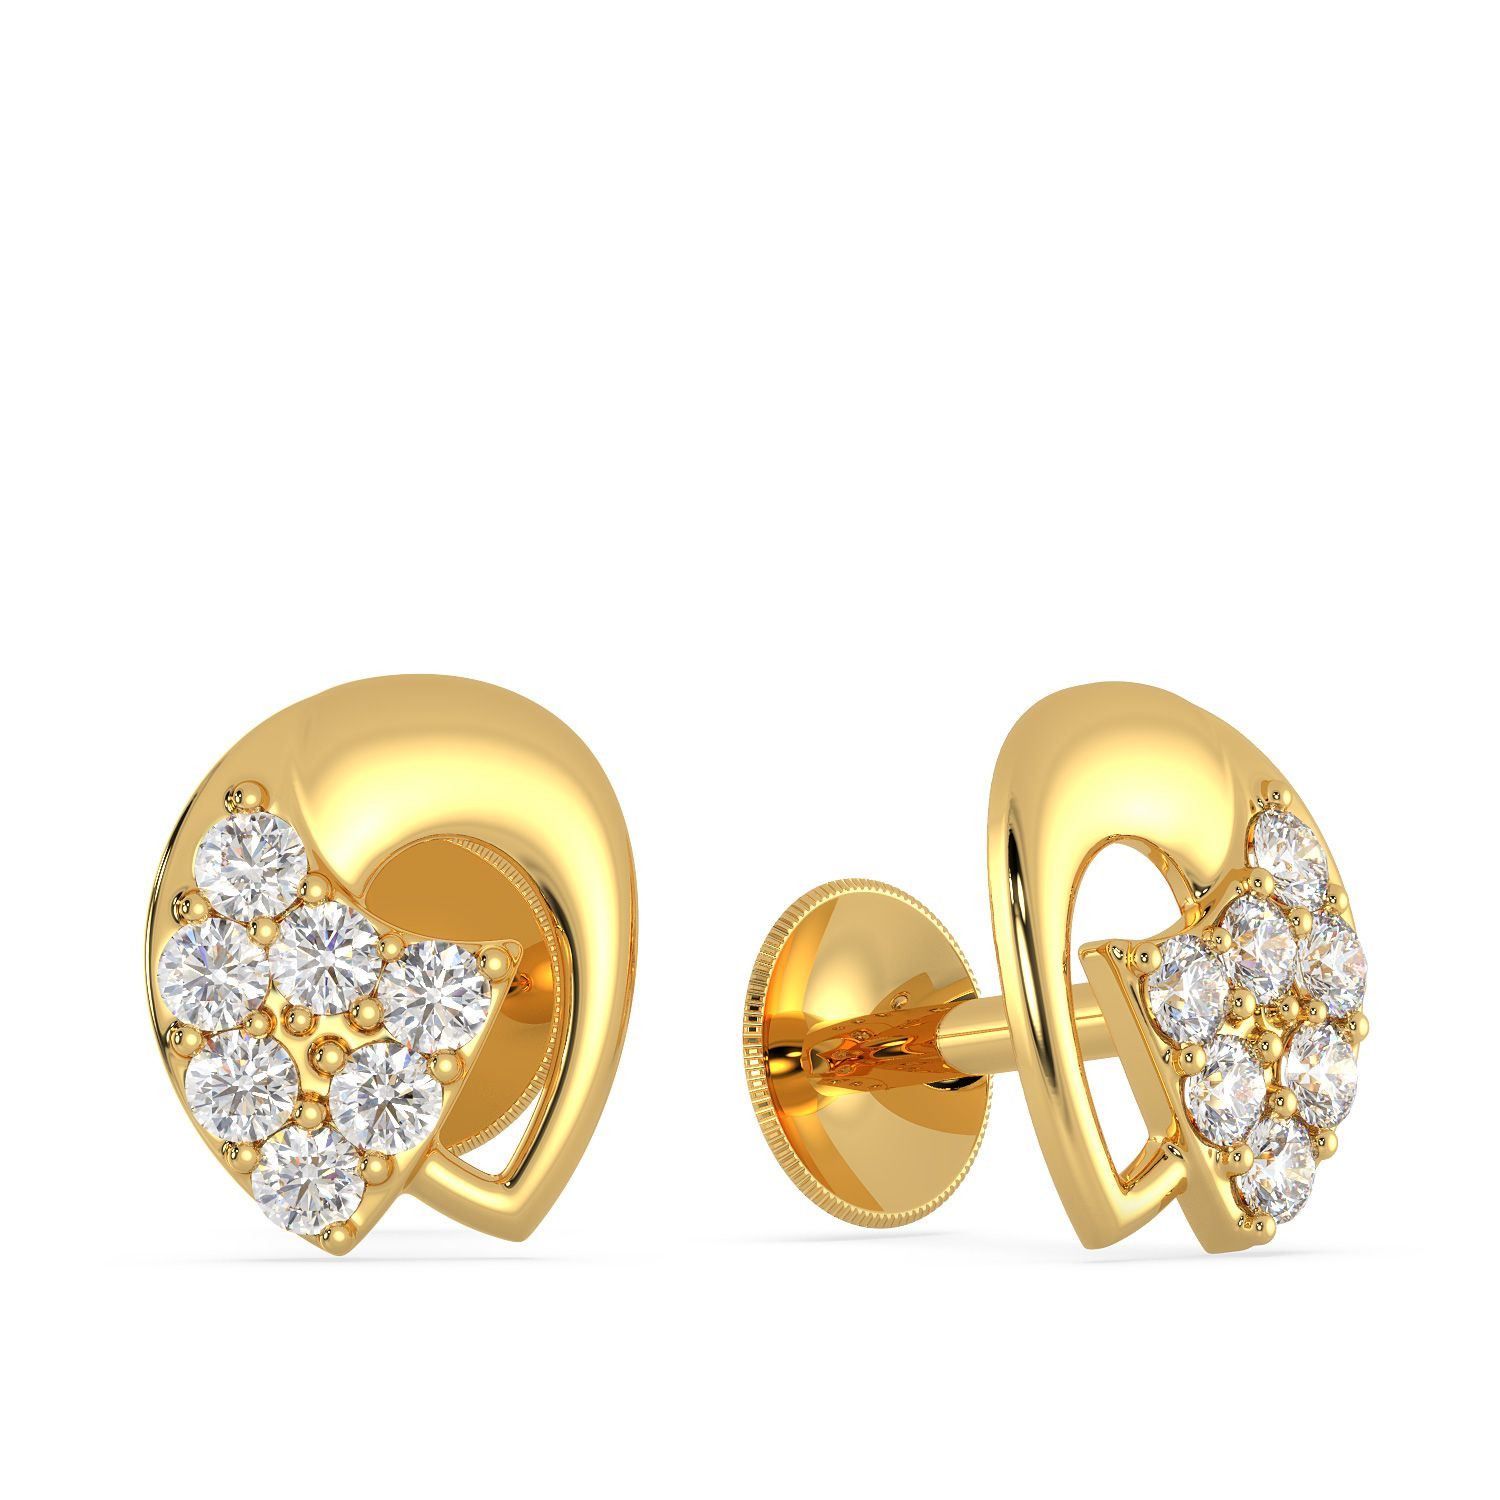 Pin on Gold Earrings